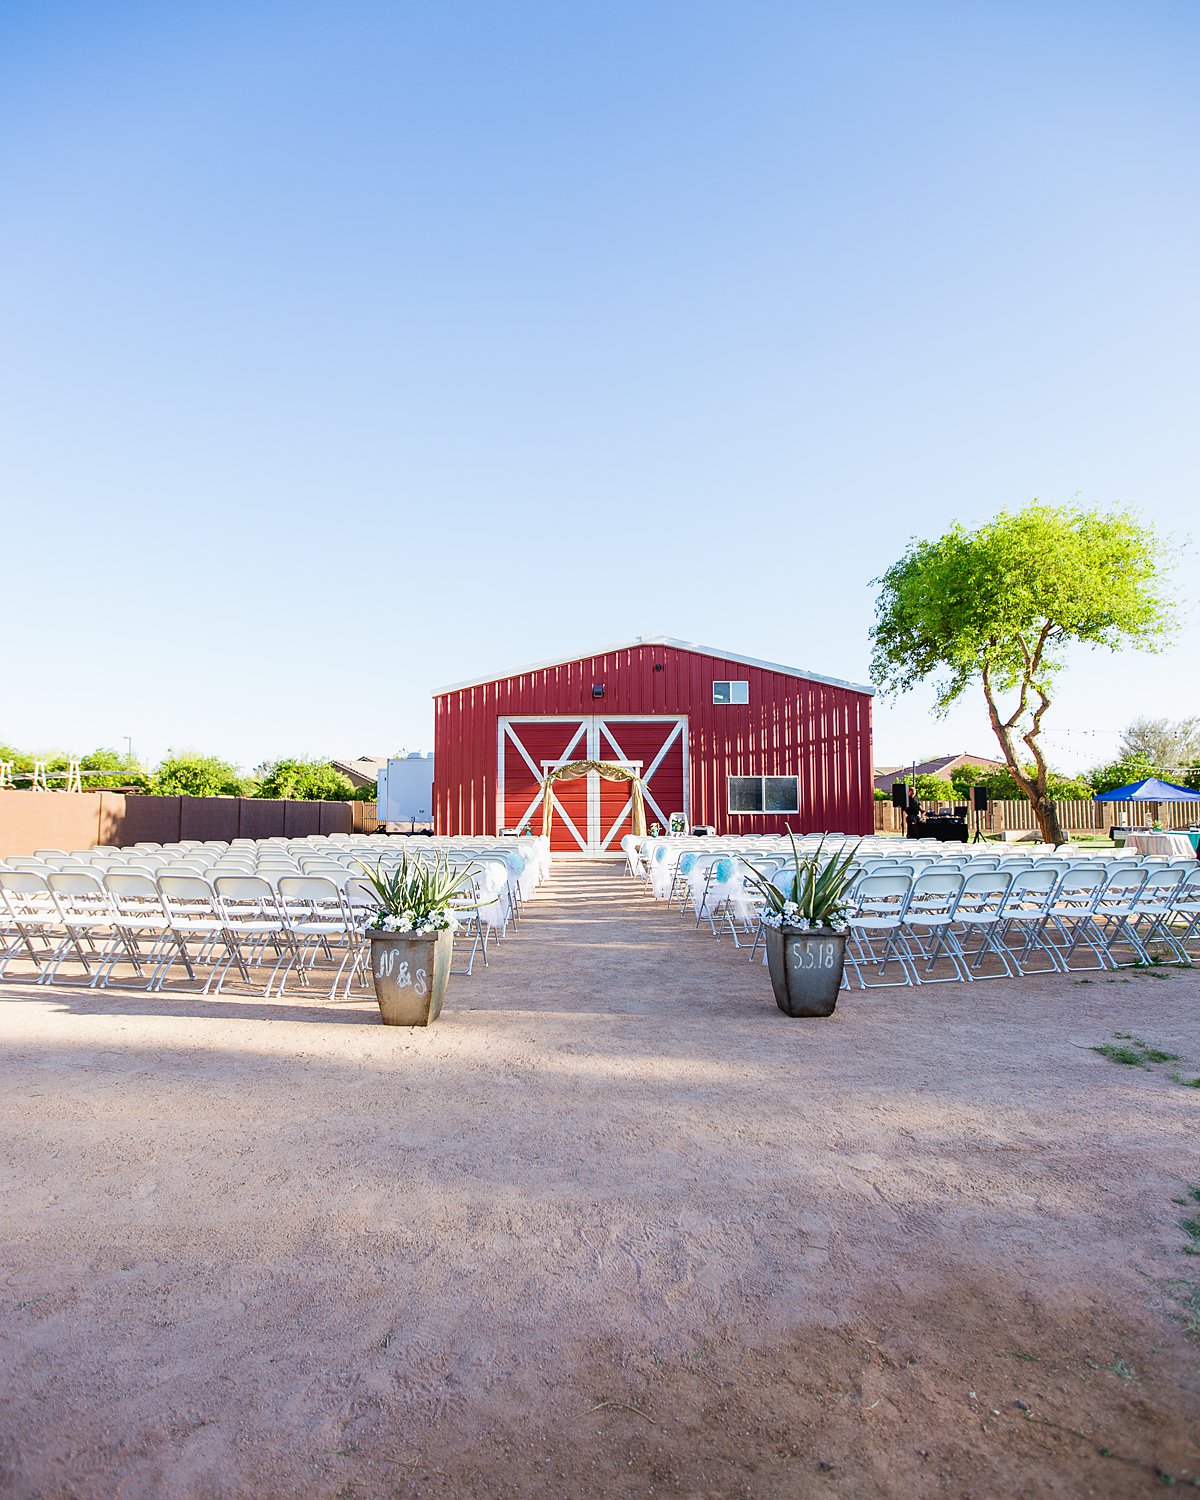 DIY backyard wedding ceremony in front of large red barn by Arizona wedding photographer PMA Photography.